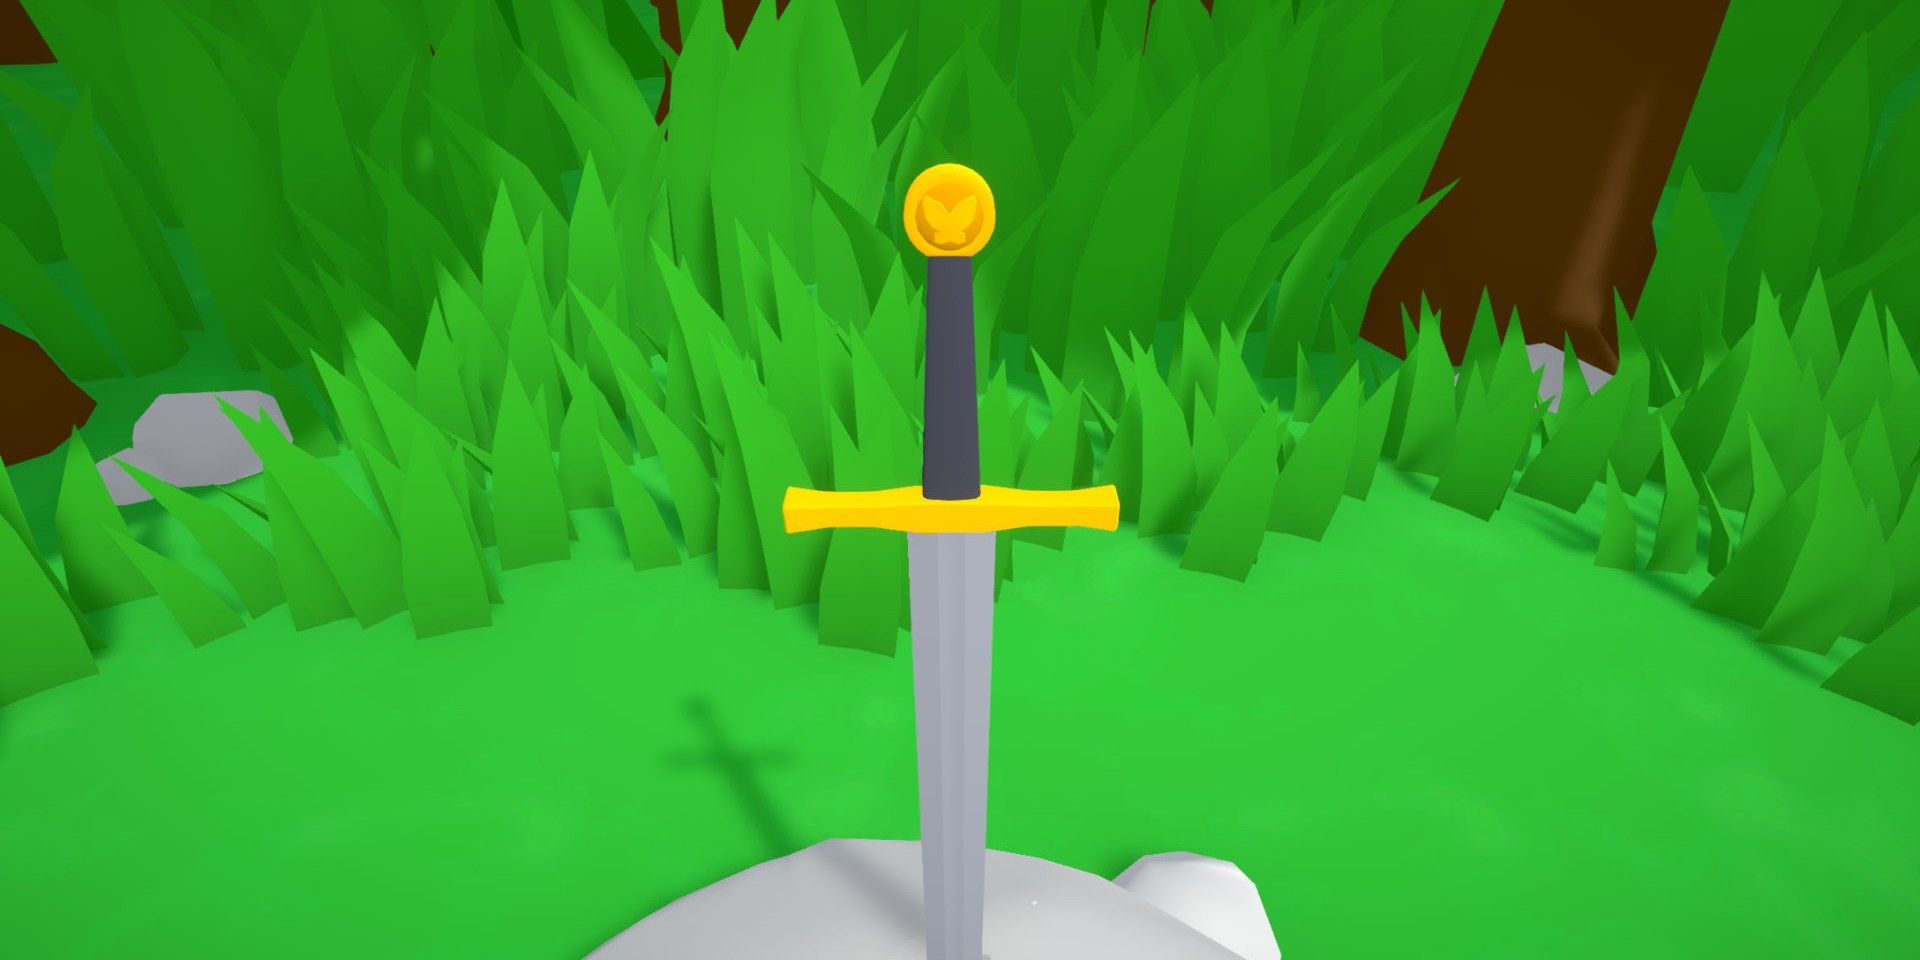 King Arthur Inspired Game Sword In Stone